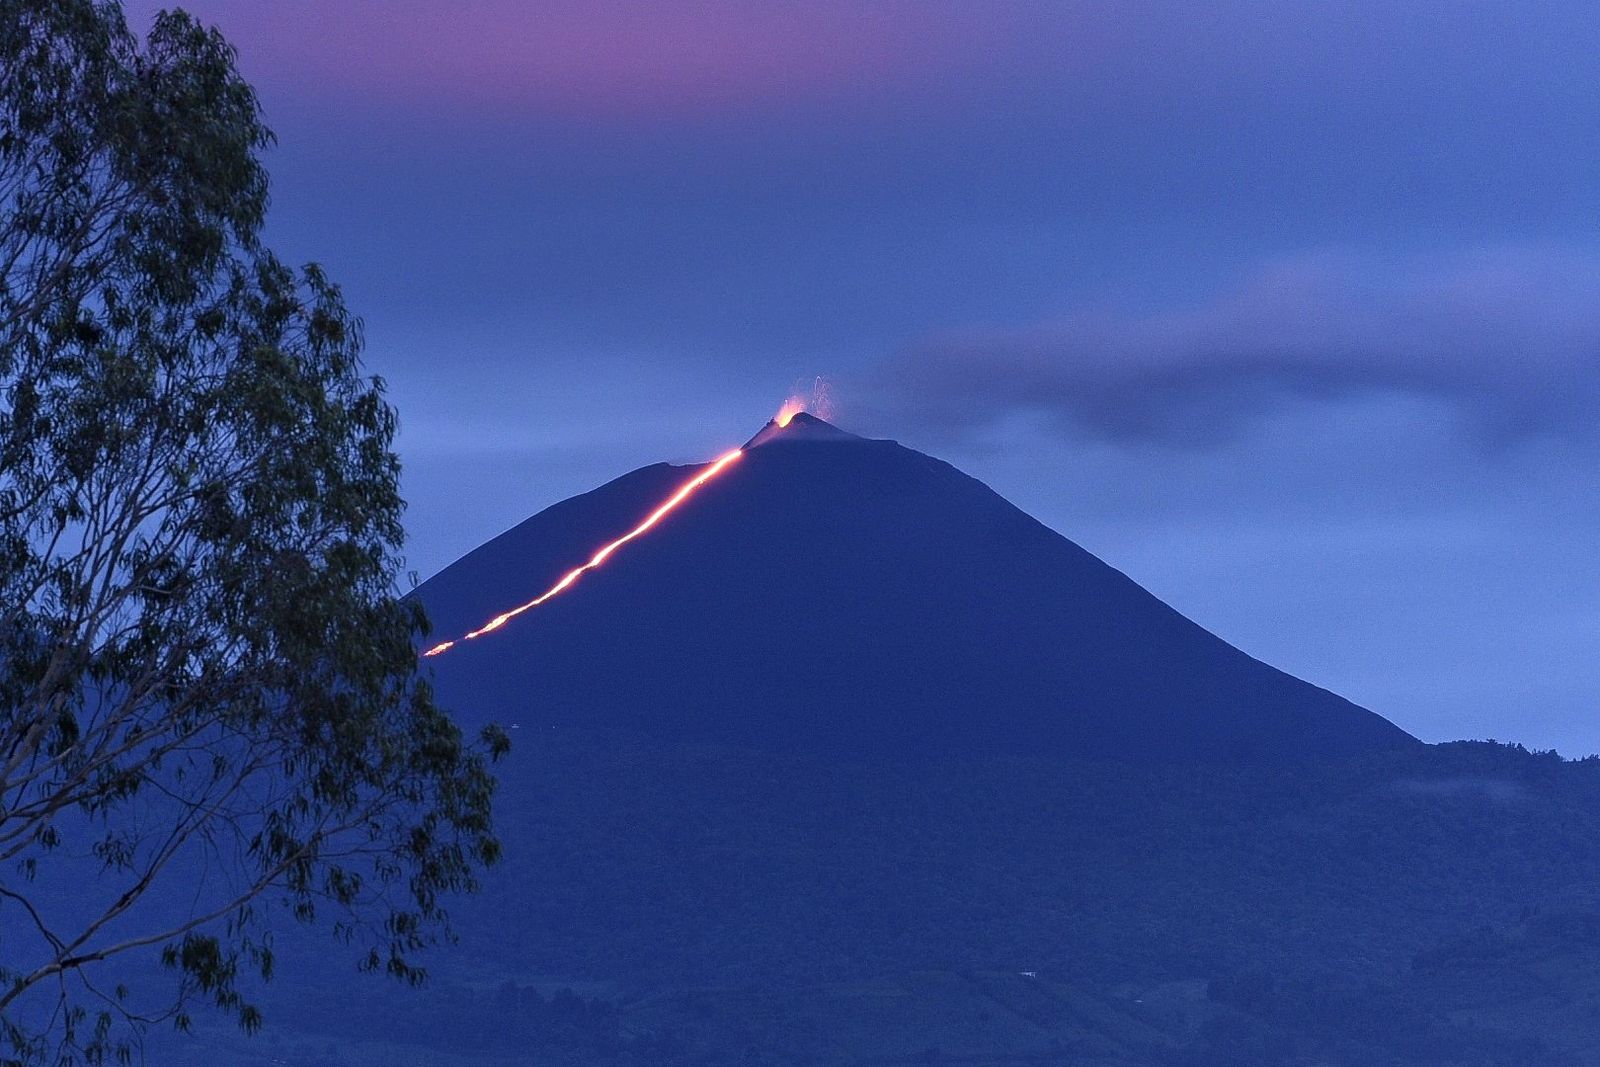 Pacaya - strombolian activity and lava flow - photo David Rojas 06.07.2020 / Twitter